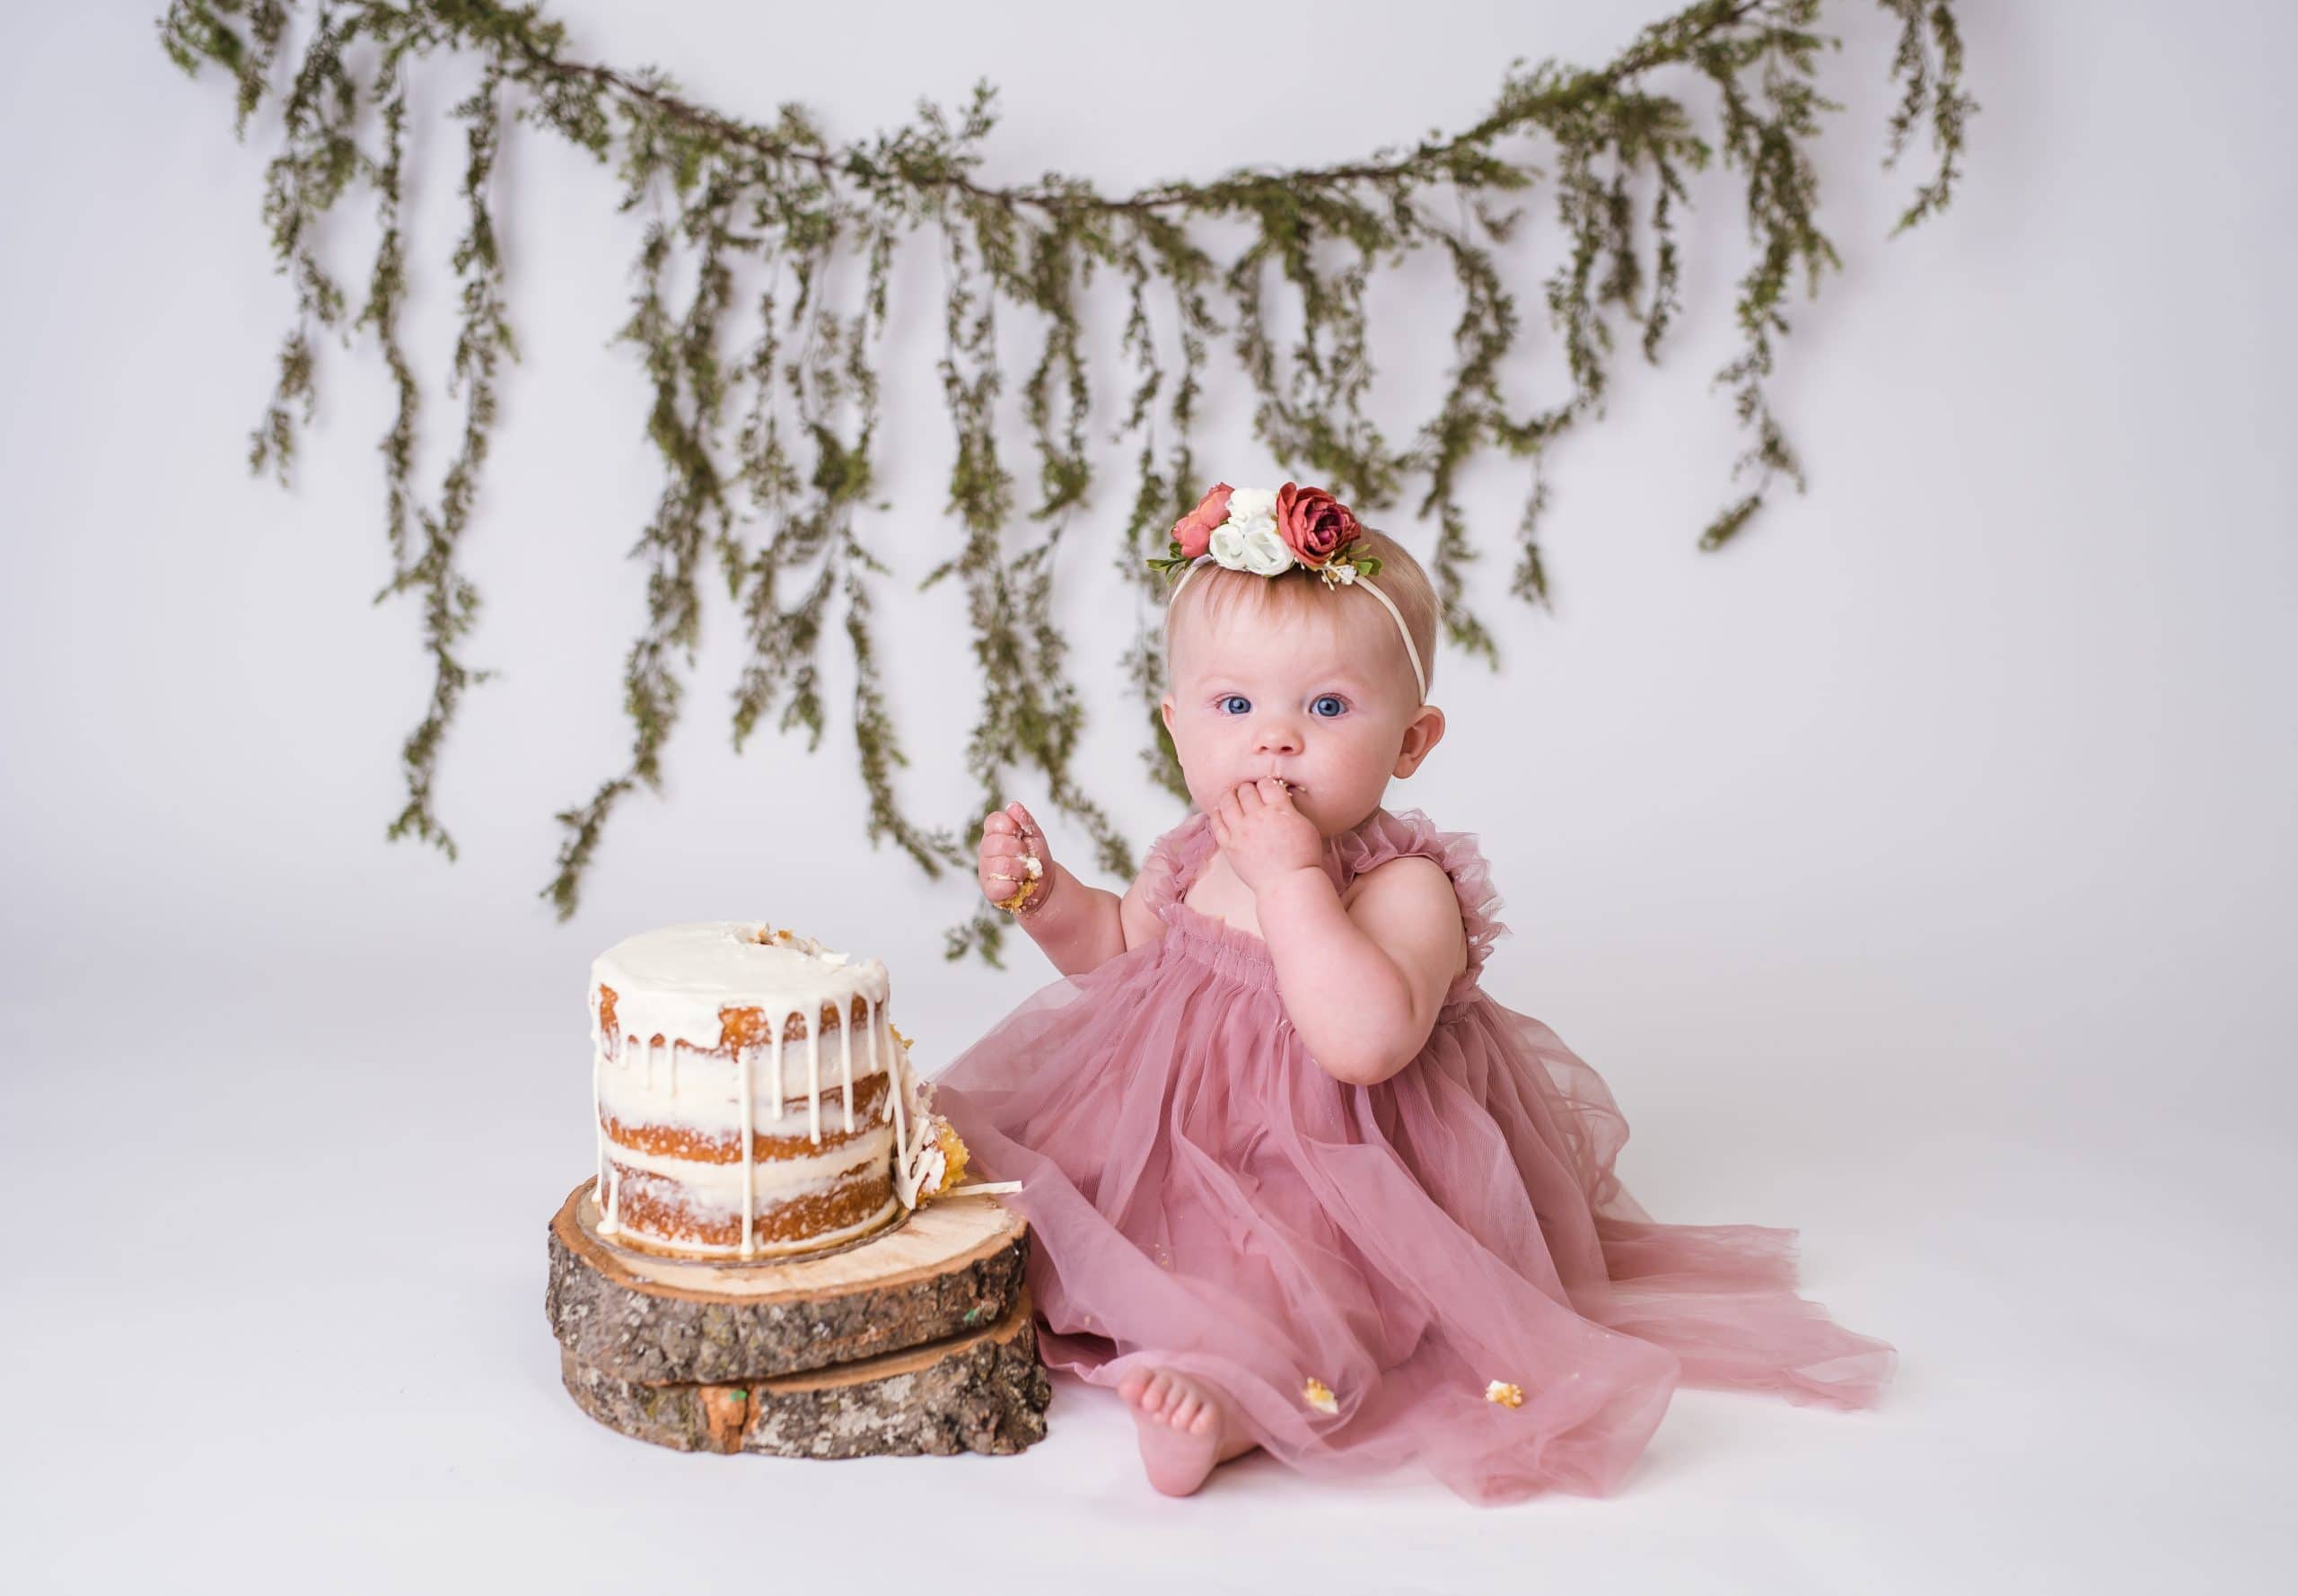 Cake smash photos in Dublin for kids first birthday.